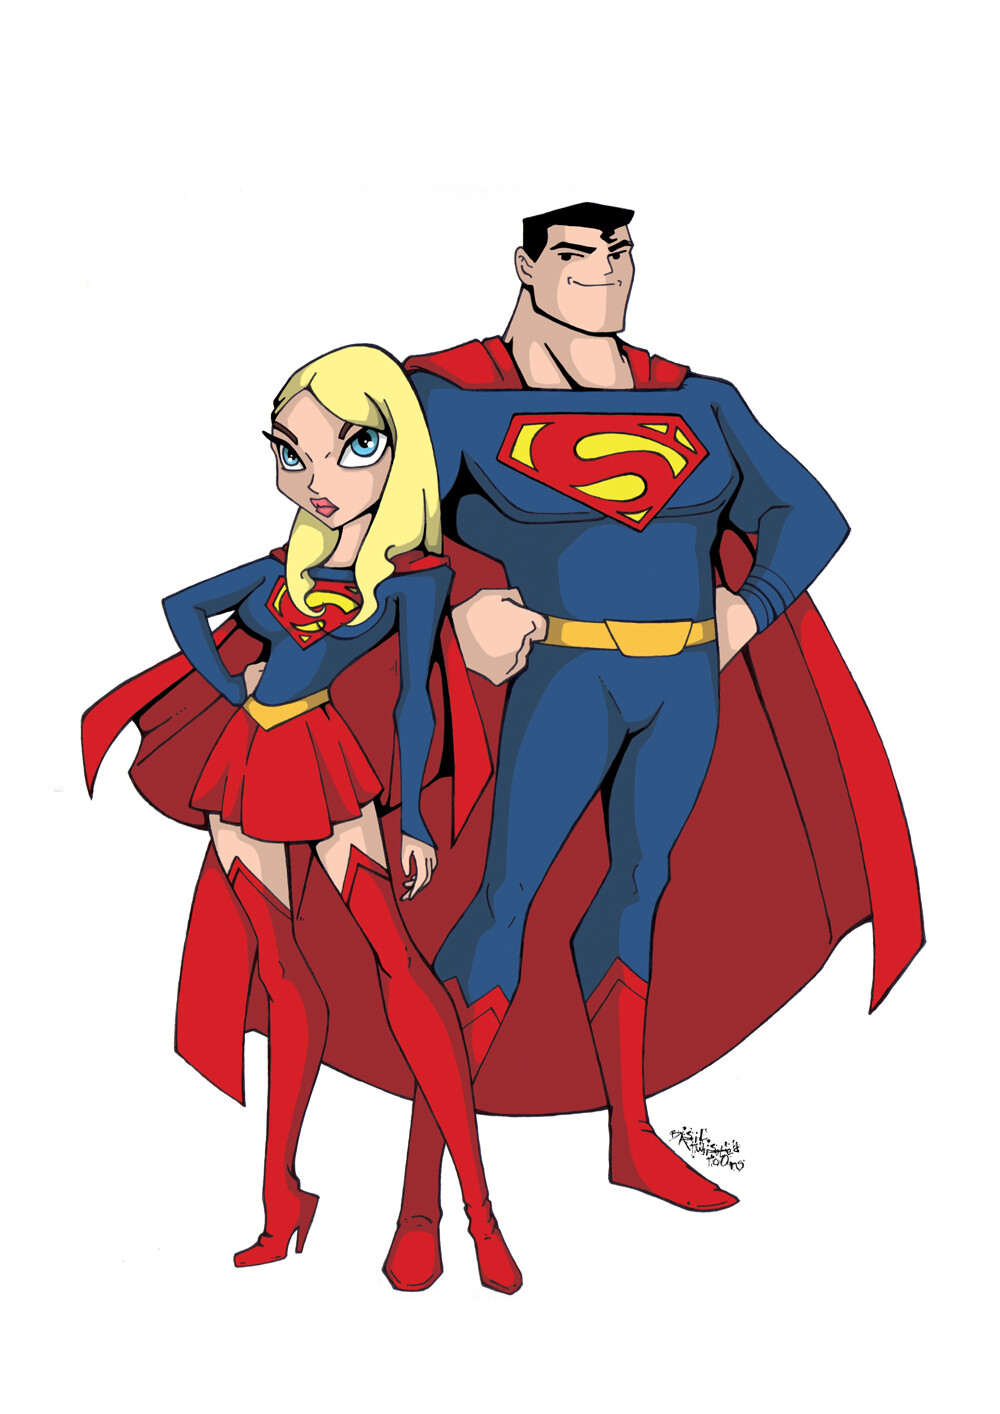 ArtStation - Supergirl and Superman cartoon